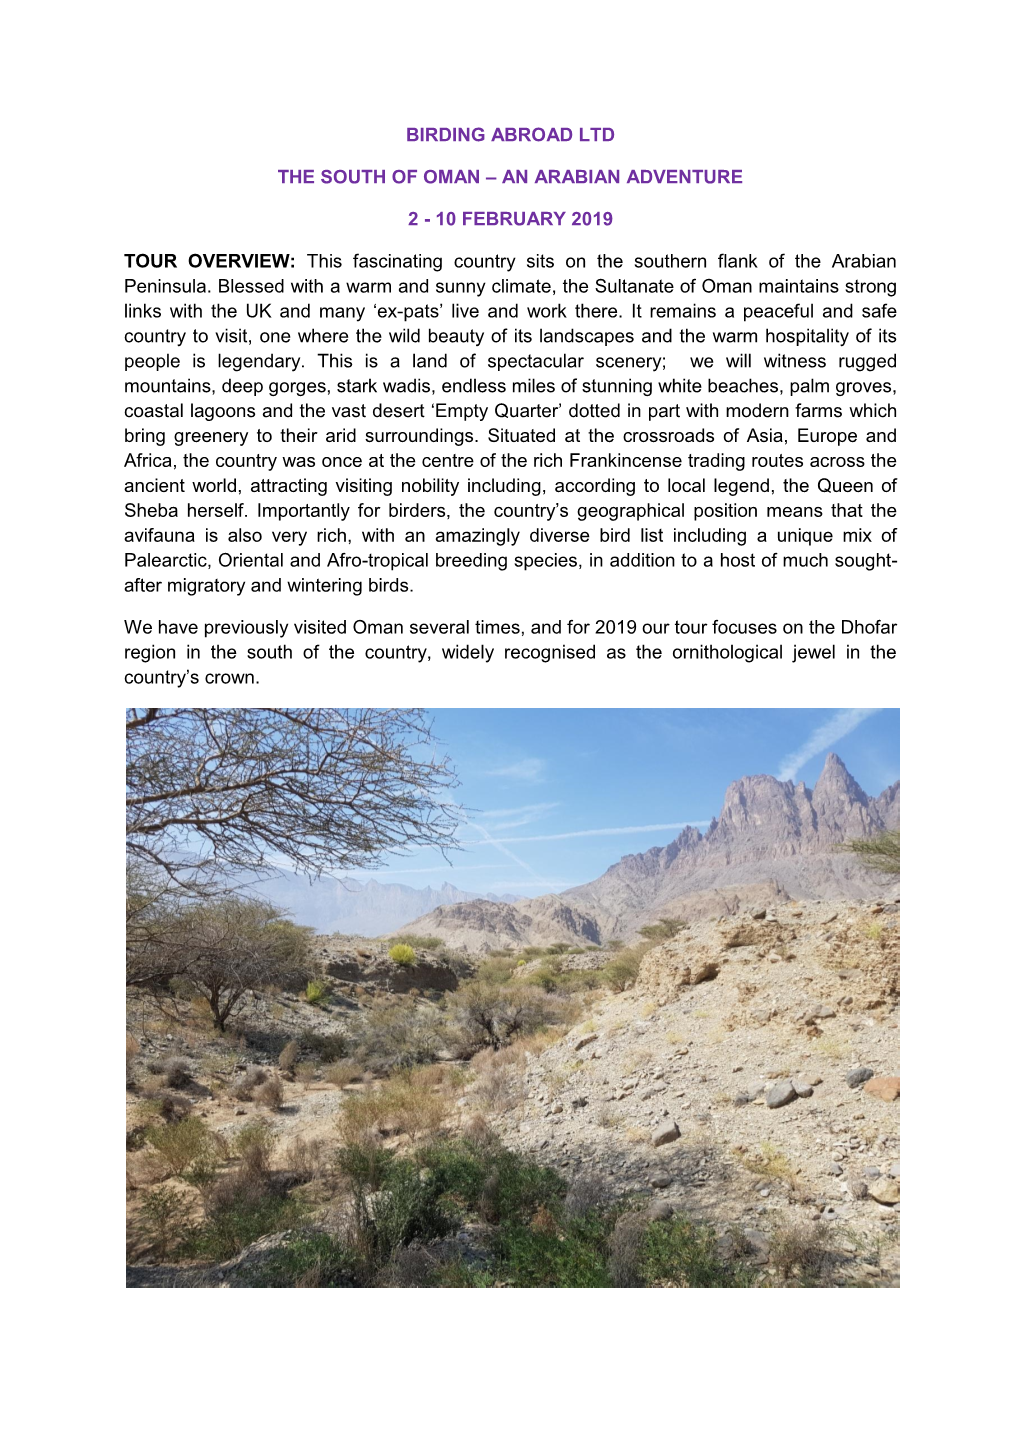 Birding Abroad Ltd the South of Oman – an Arabian Adventure 2